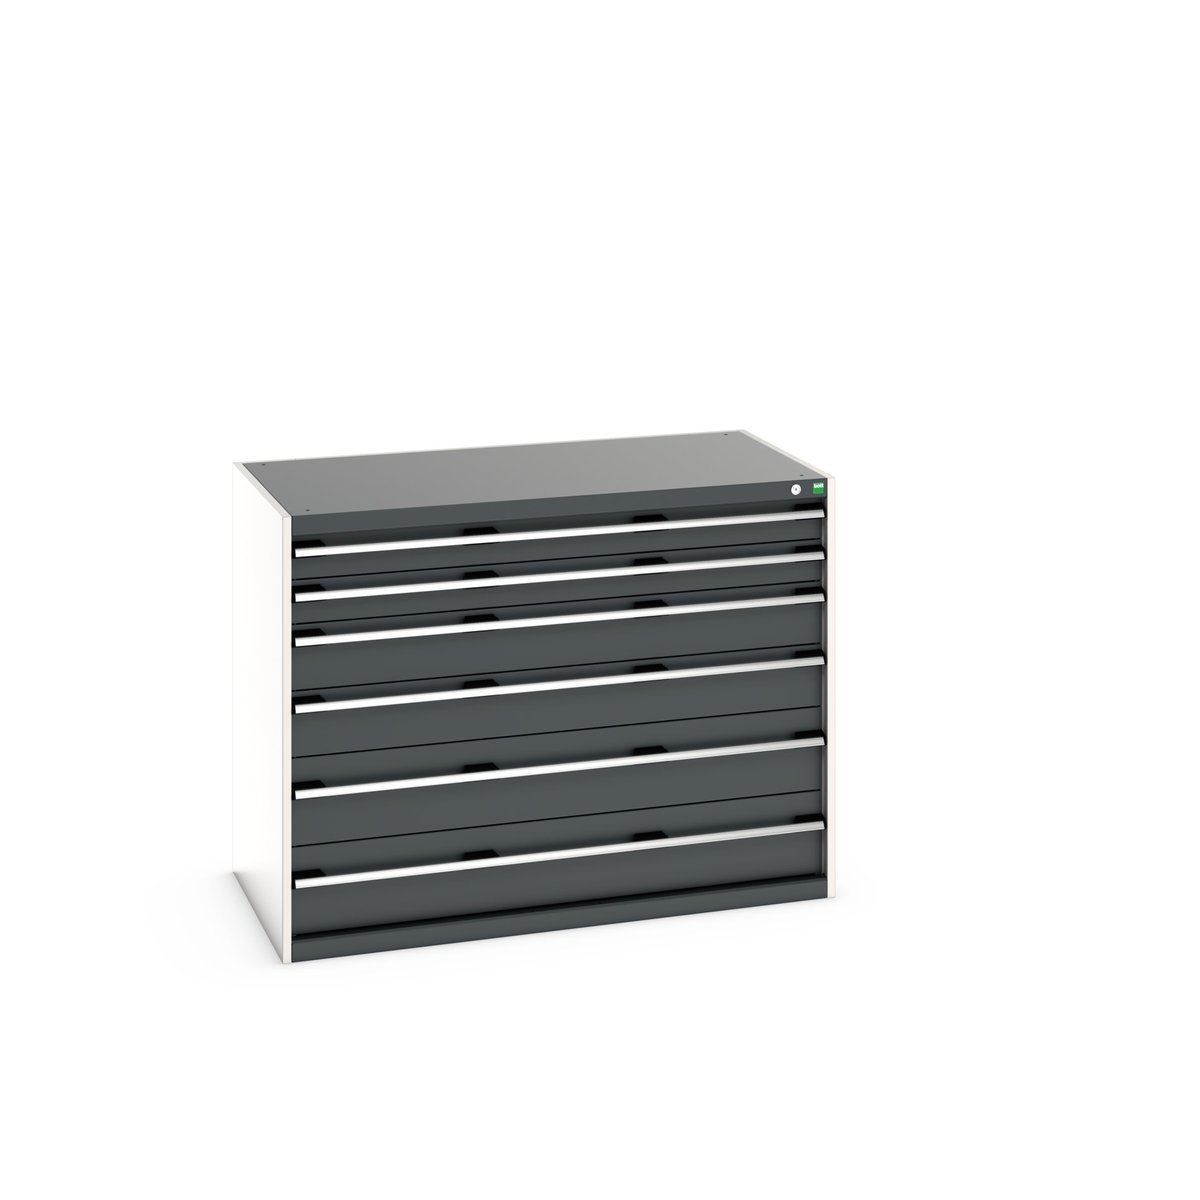 40030094. - cubio drawer cabinet